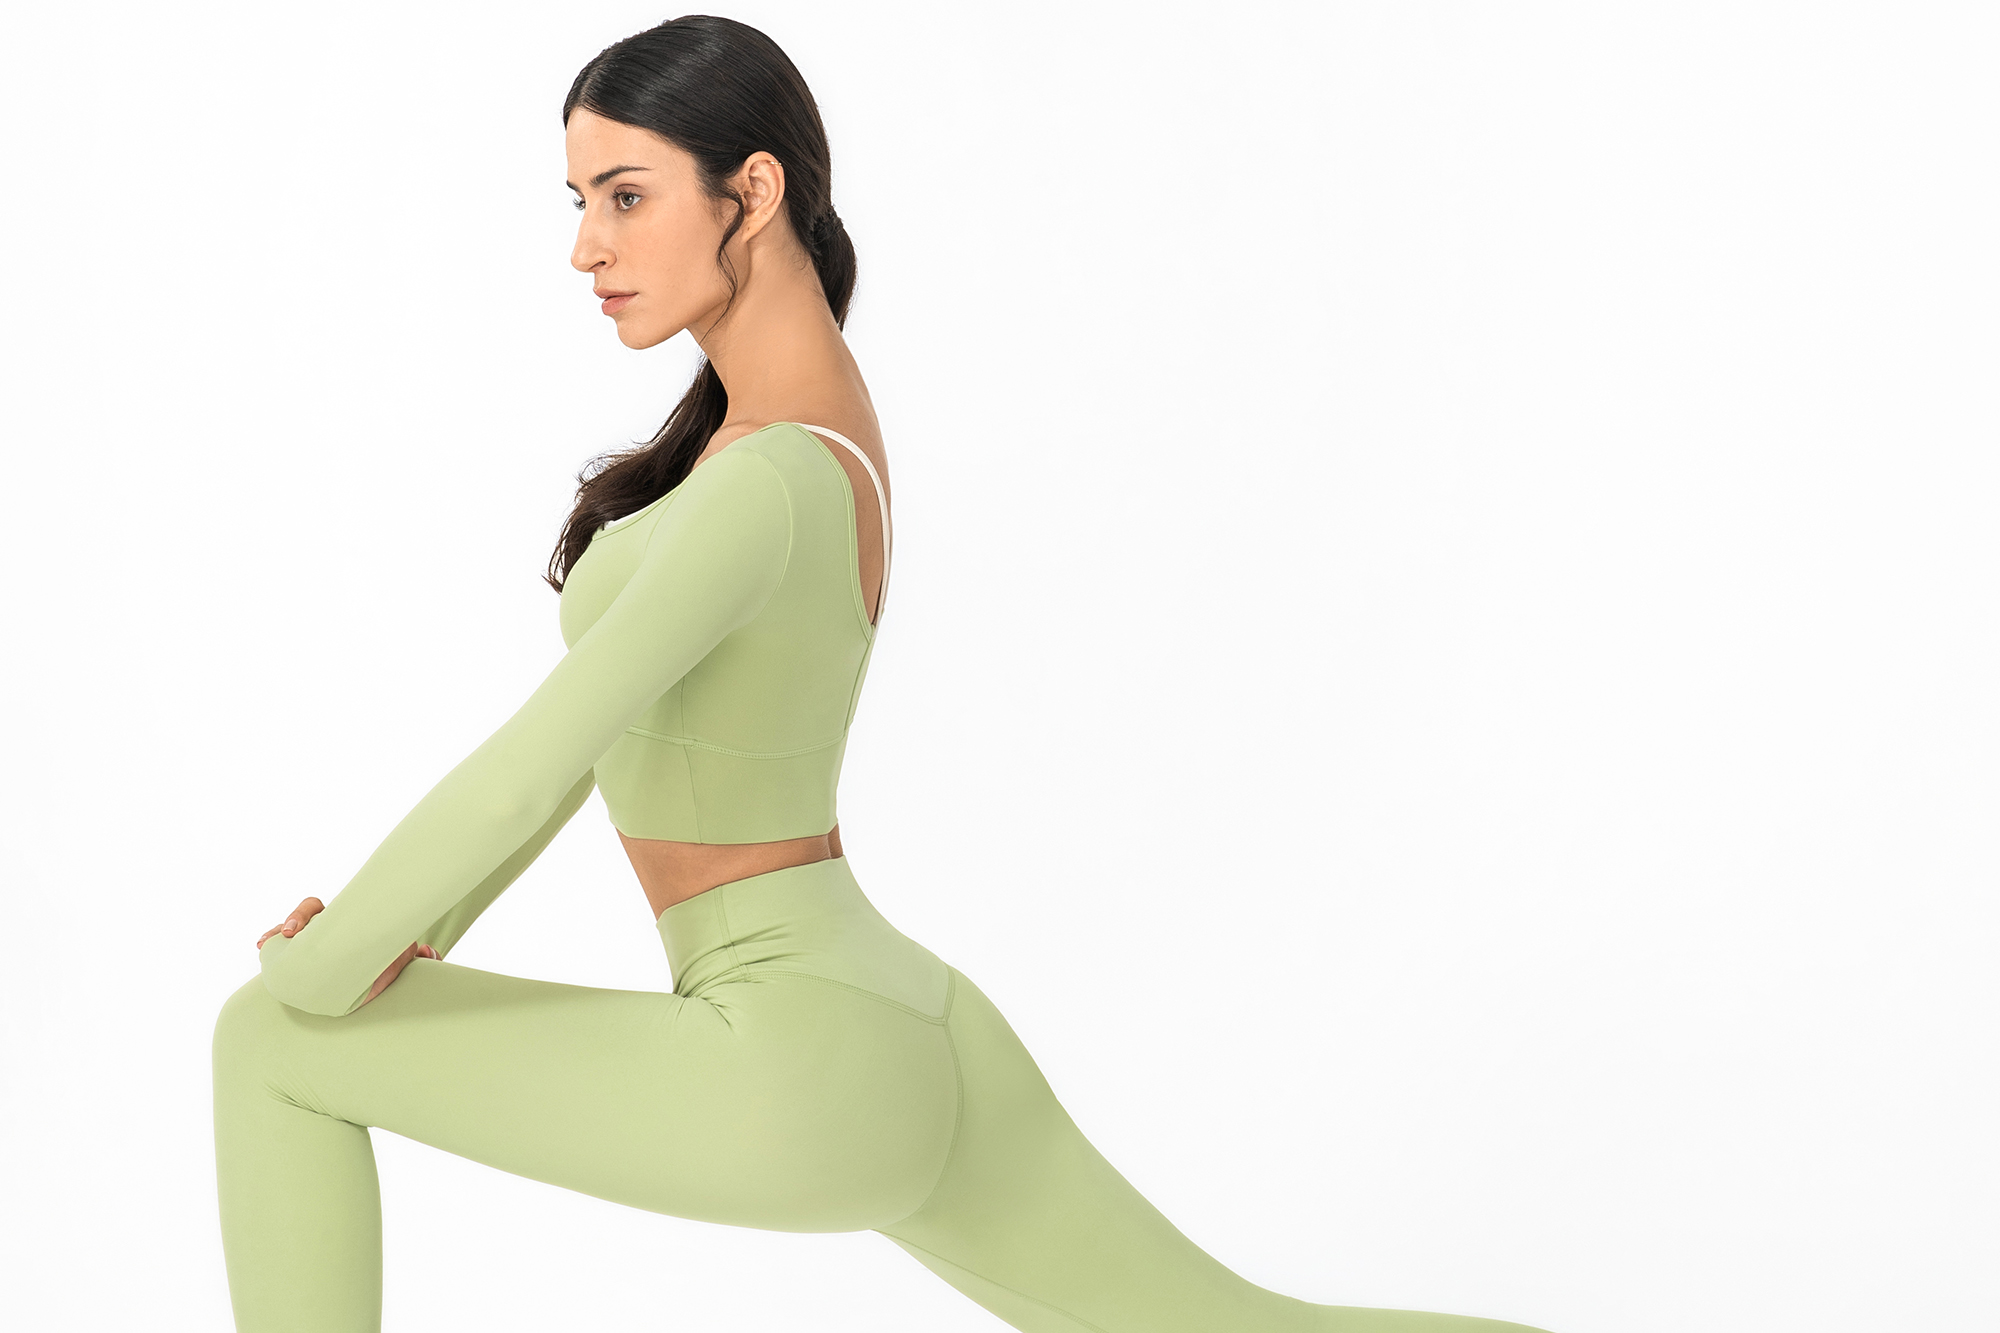 Hergymclothing green yoga shirts with thumb holes and green yoga leggings